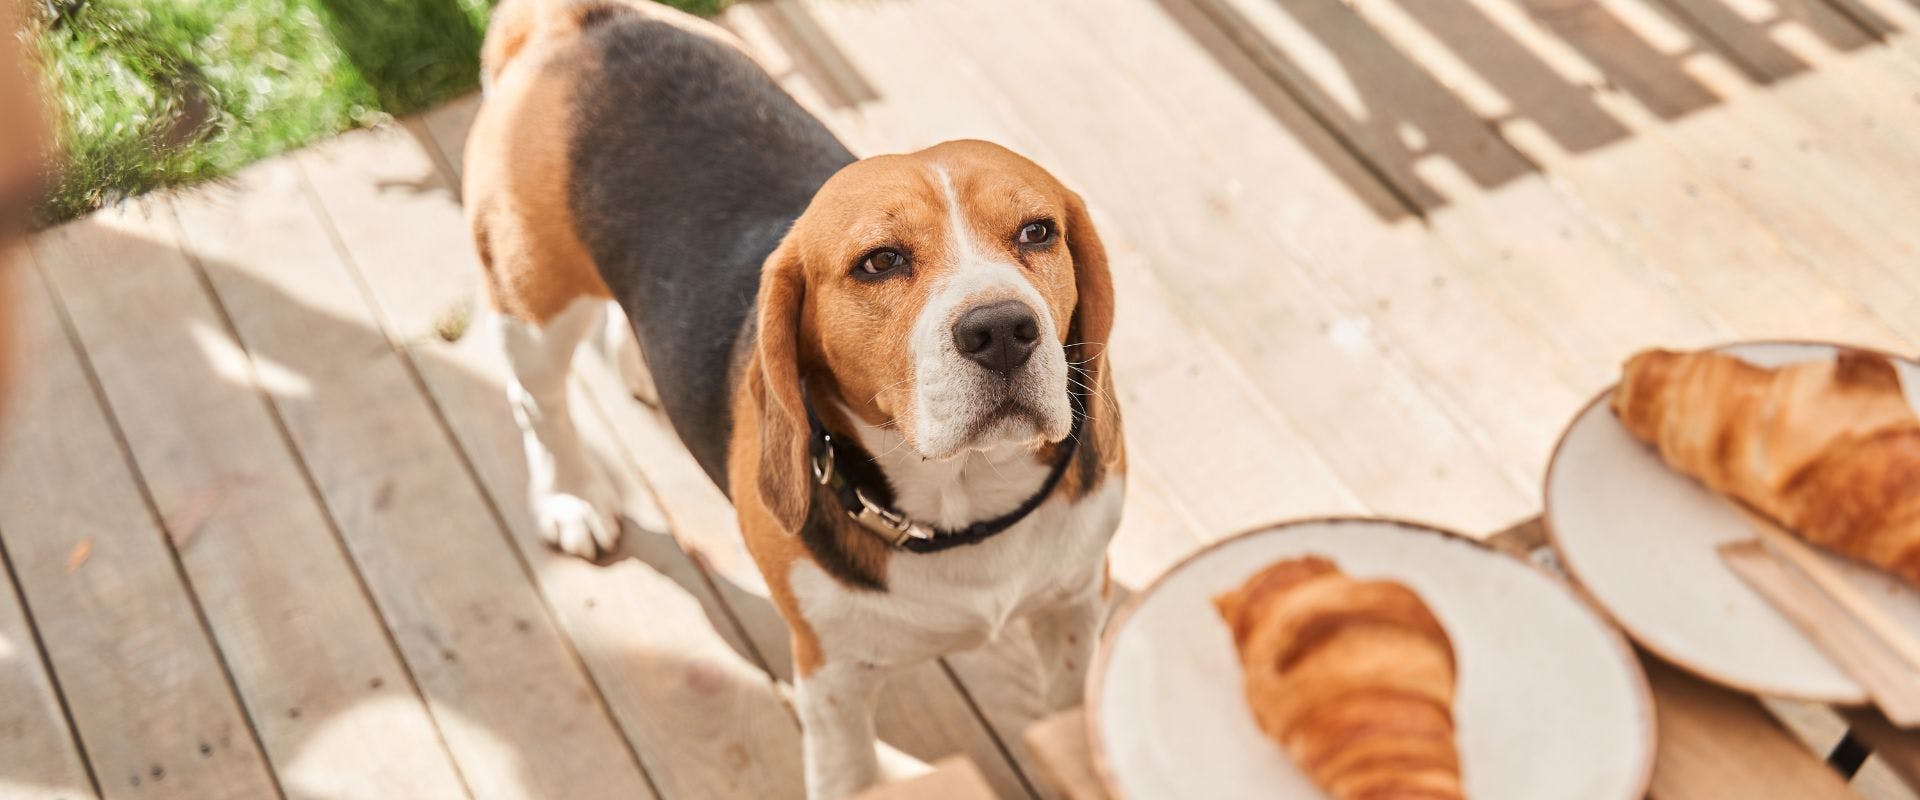 Beagle dog waiting for croissants